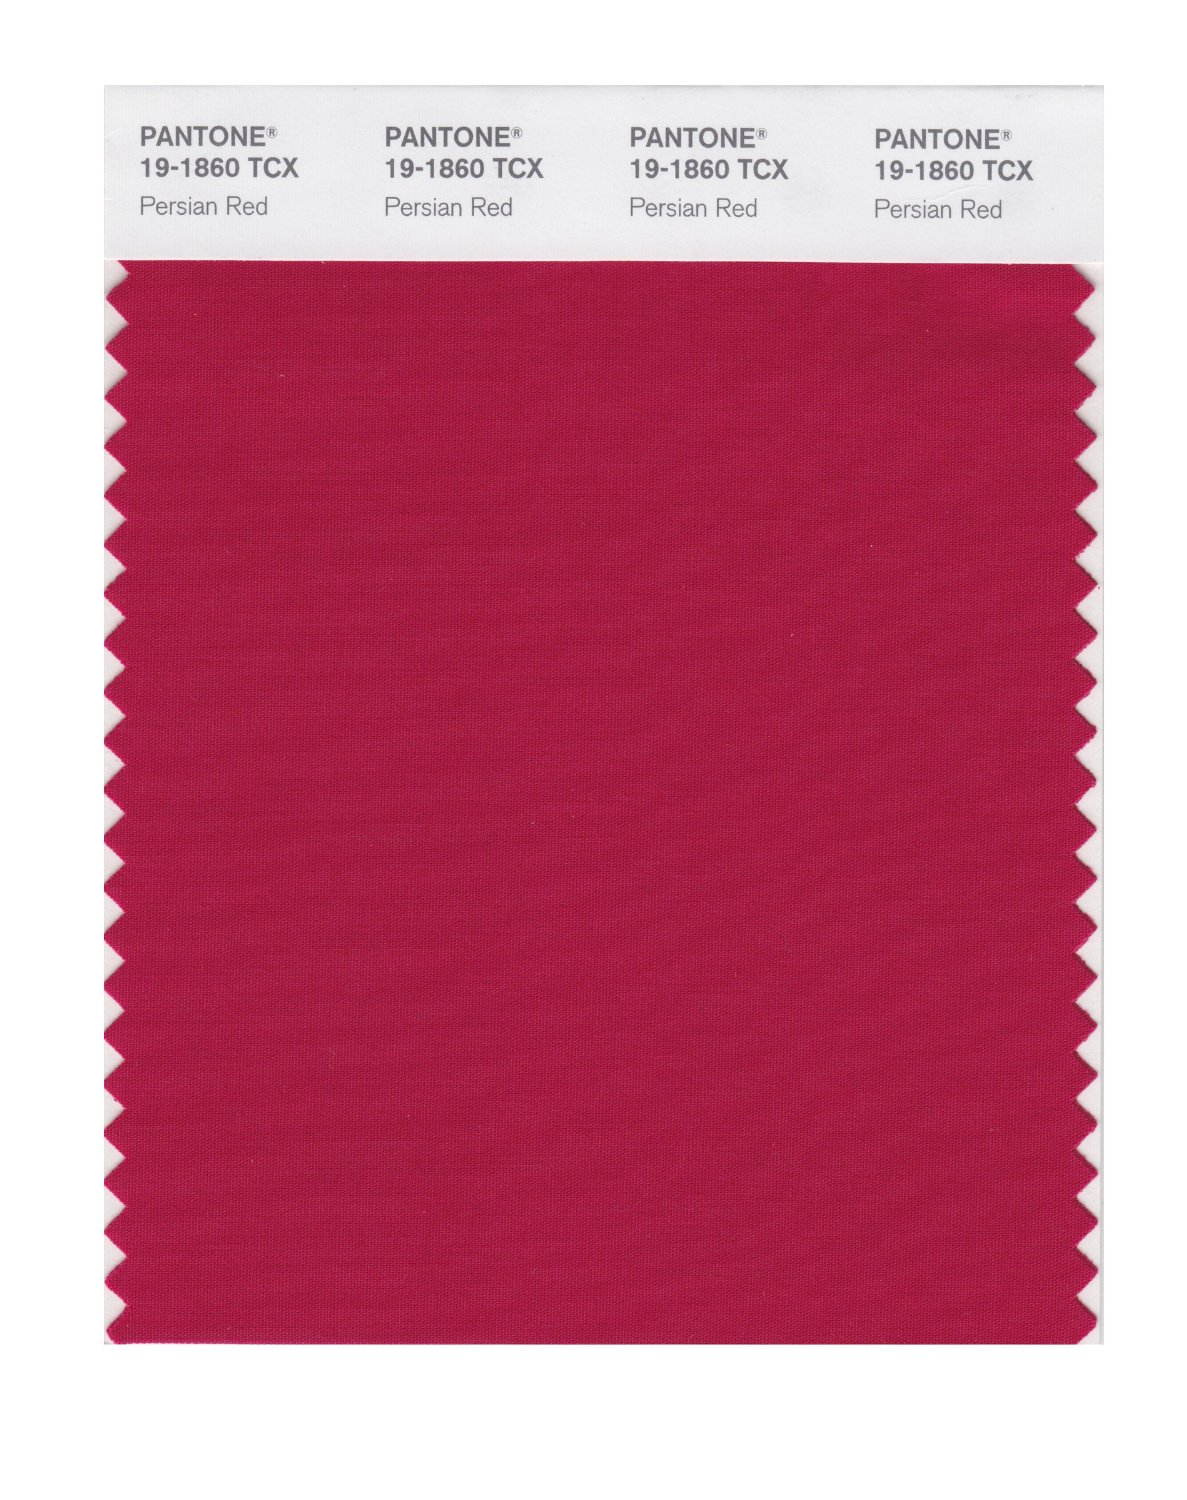 Pantone Cotton Swatch 19-1860 Persian Red